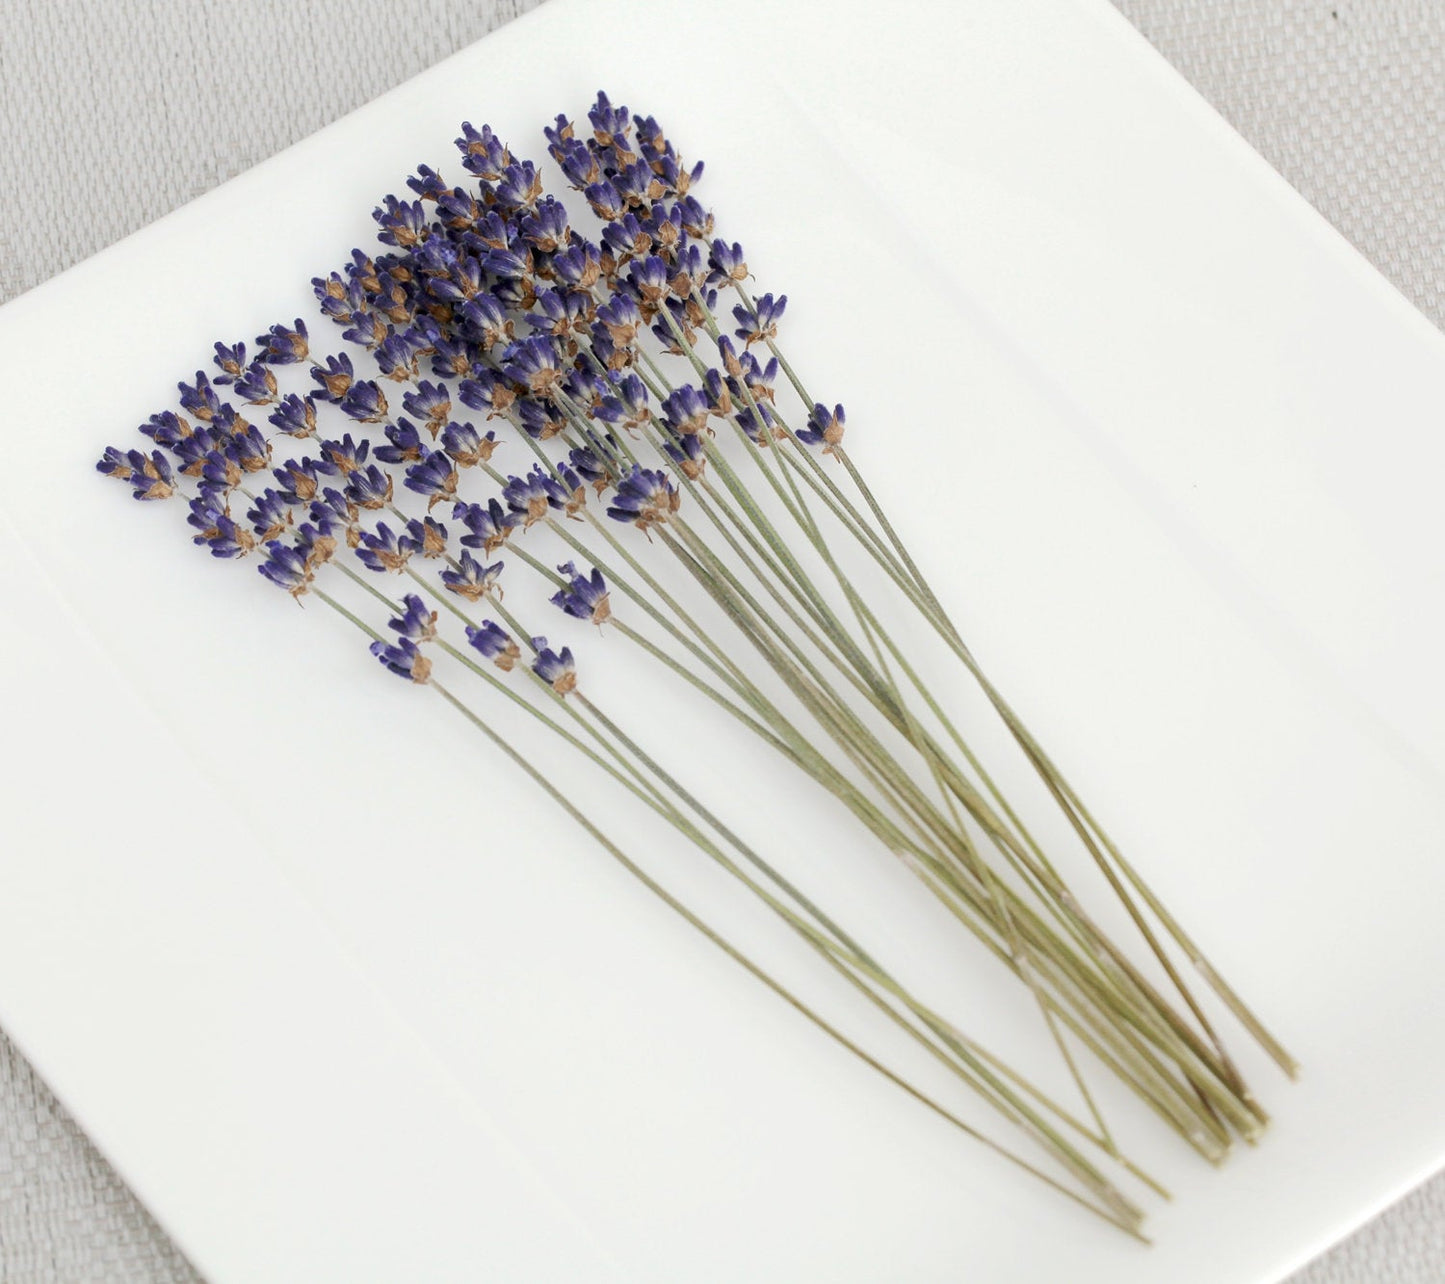 Organic Lavender Cocktail Picks | AM Lavender